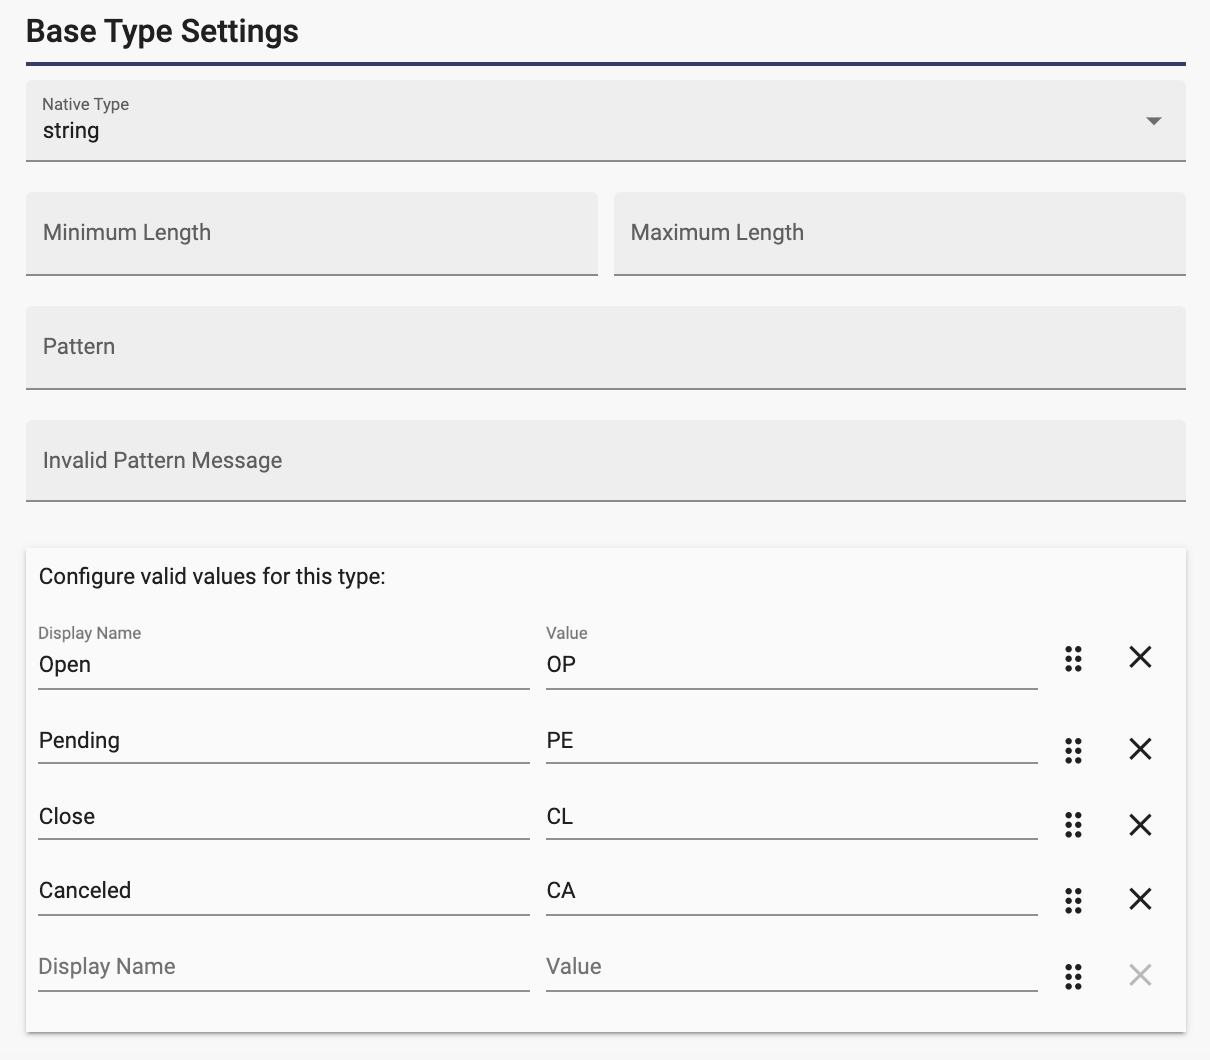 Base type settings for status